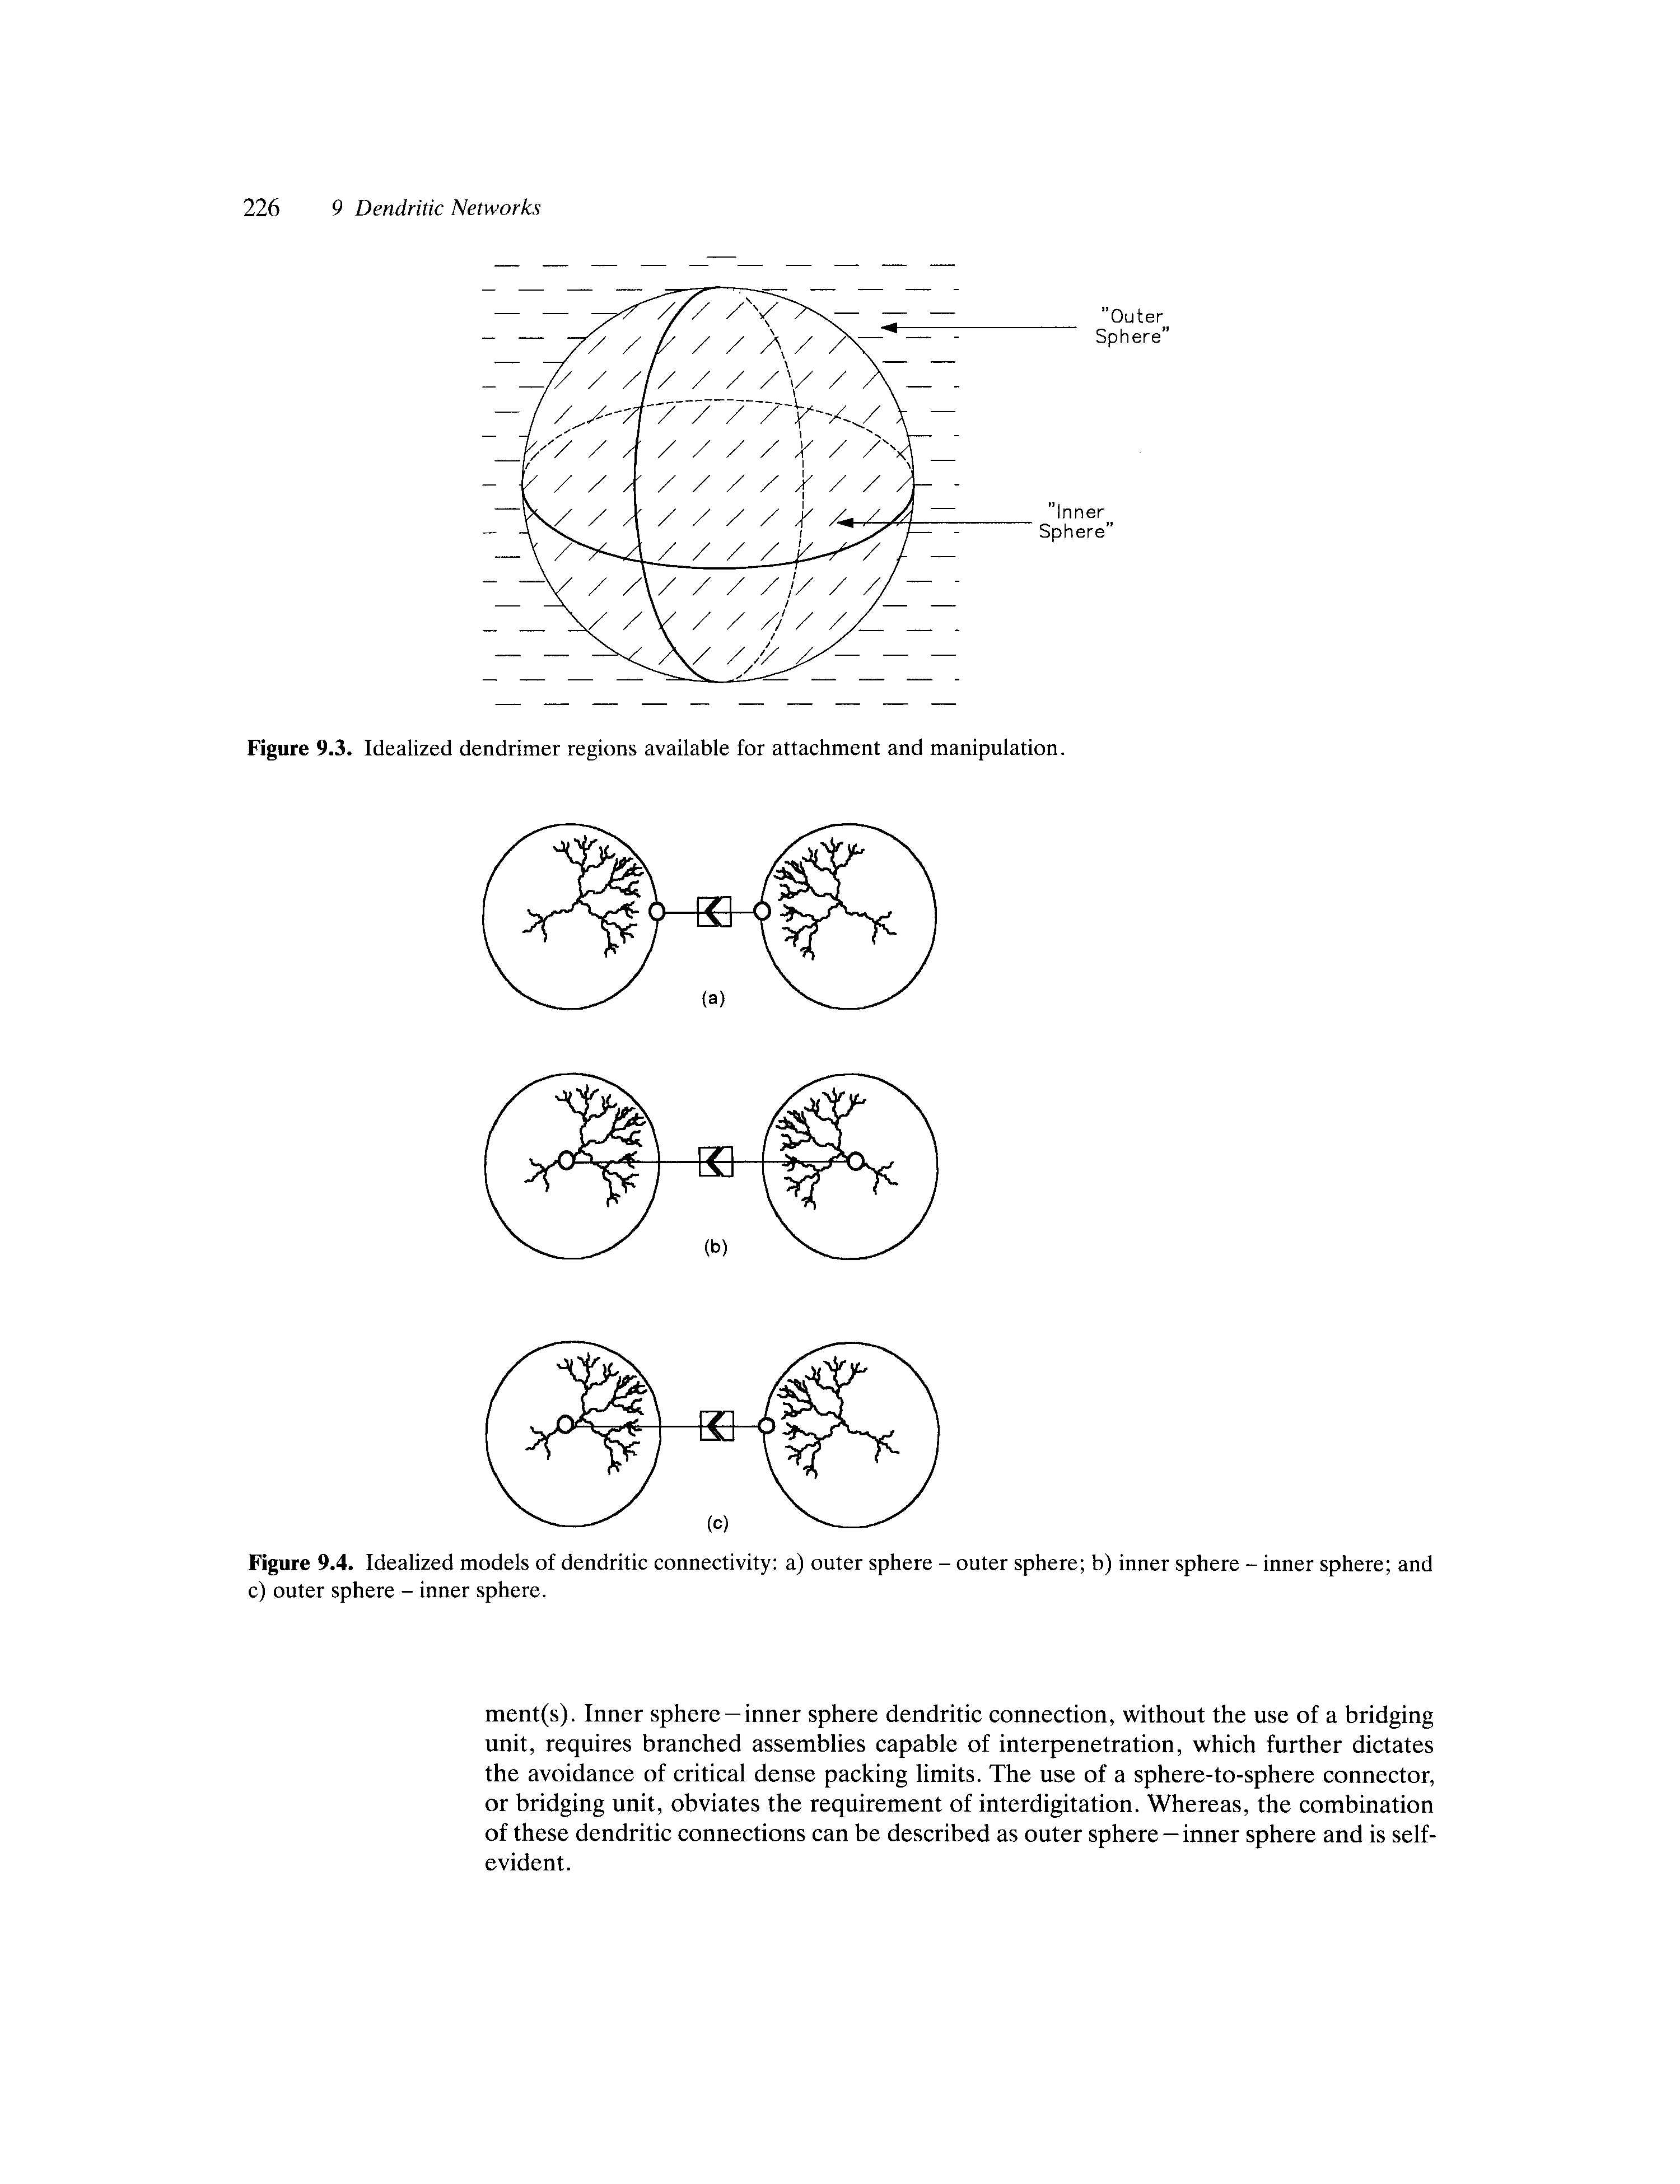 Figure 9.4. Idealized models of dendritic connectivity a) outer sphere - outer sphere b) inner sphere - inner sphere and c) outer sphere - inner sphere.